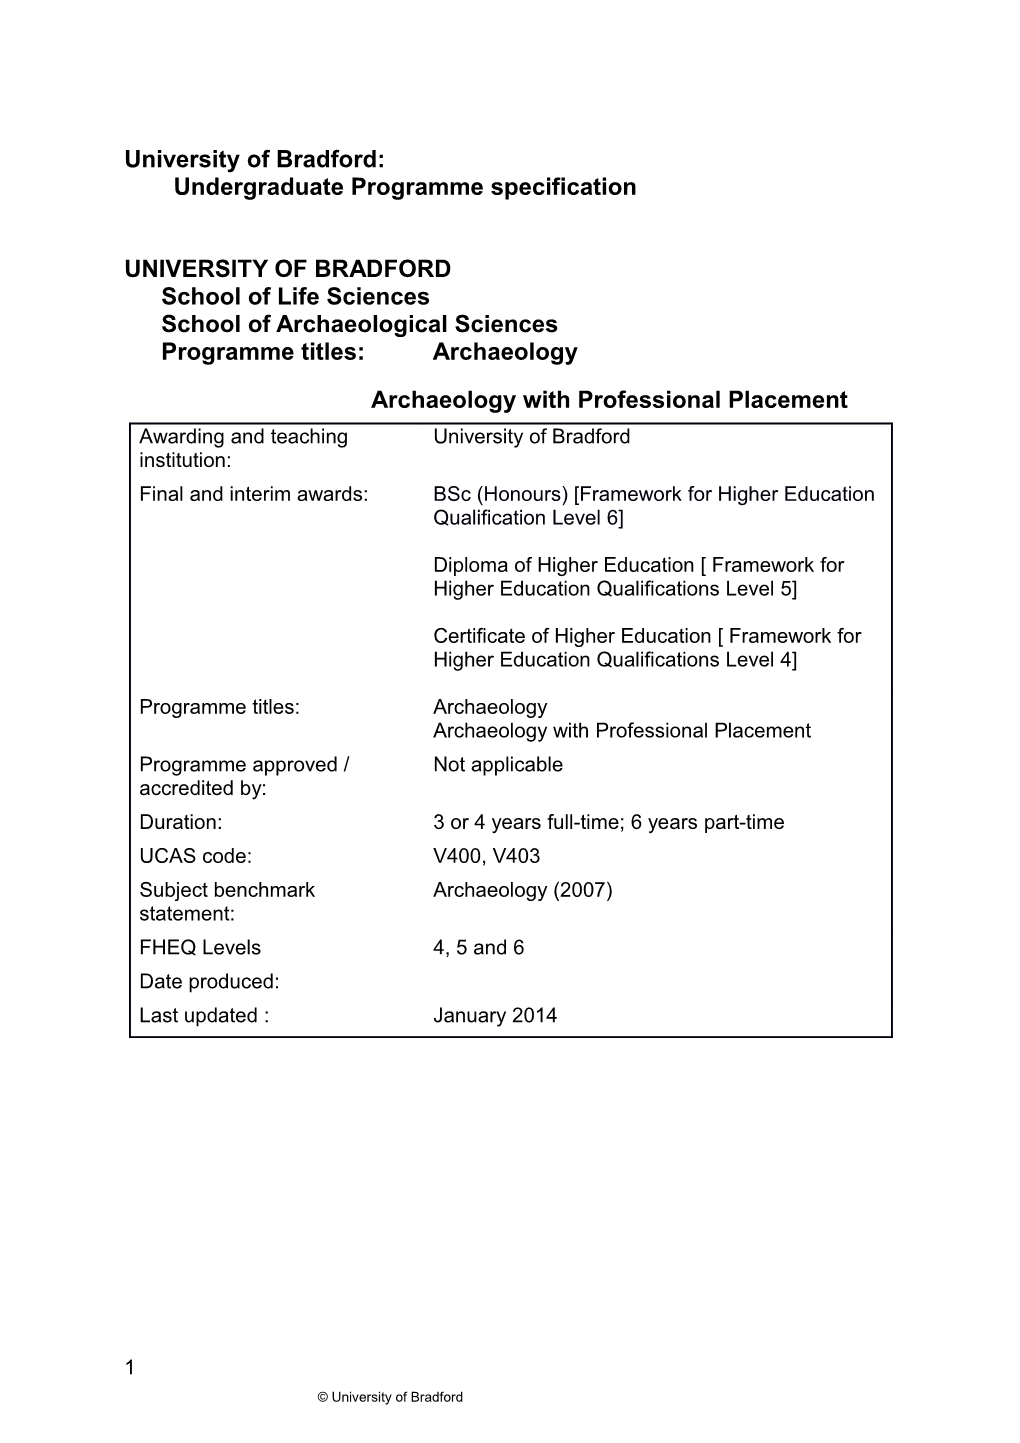 University of Bradford: Undergraduate Programme Specification s2